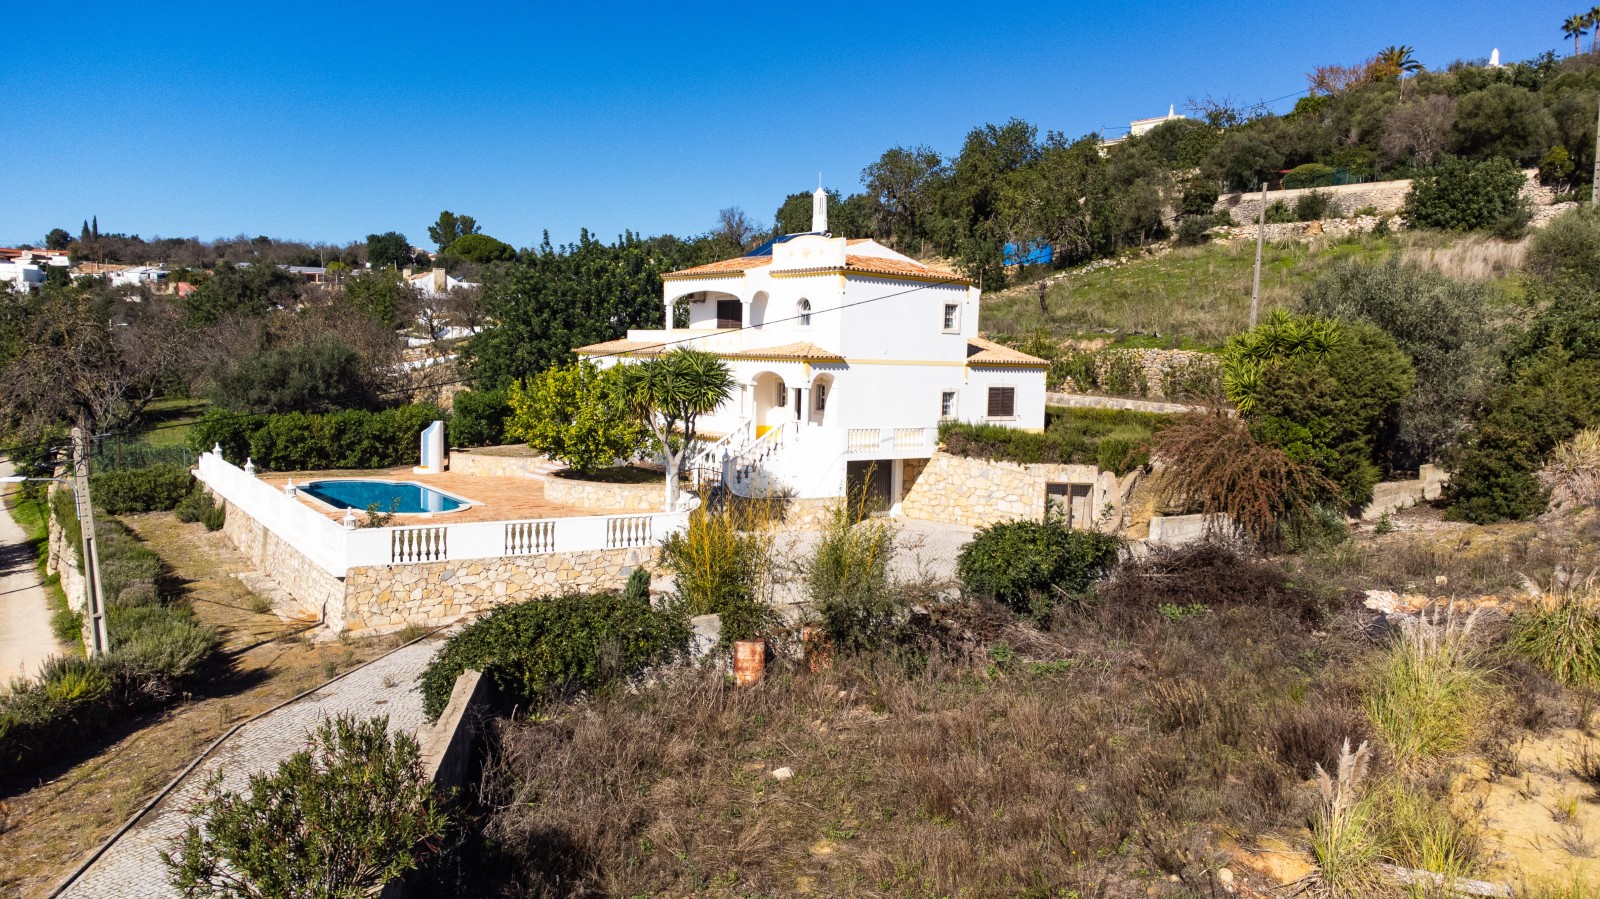 4-Bedroom Villa with swimming pool, for sale in Boliqueime, Loulé, Algarve_267416